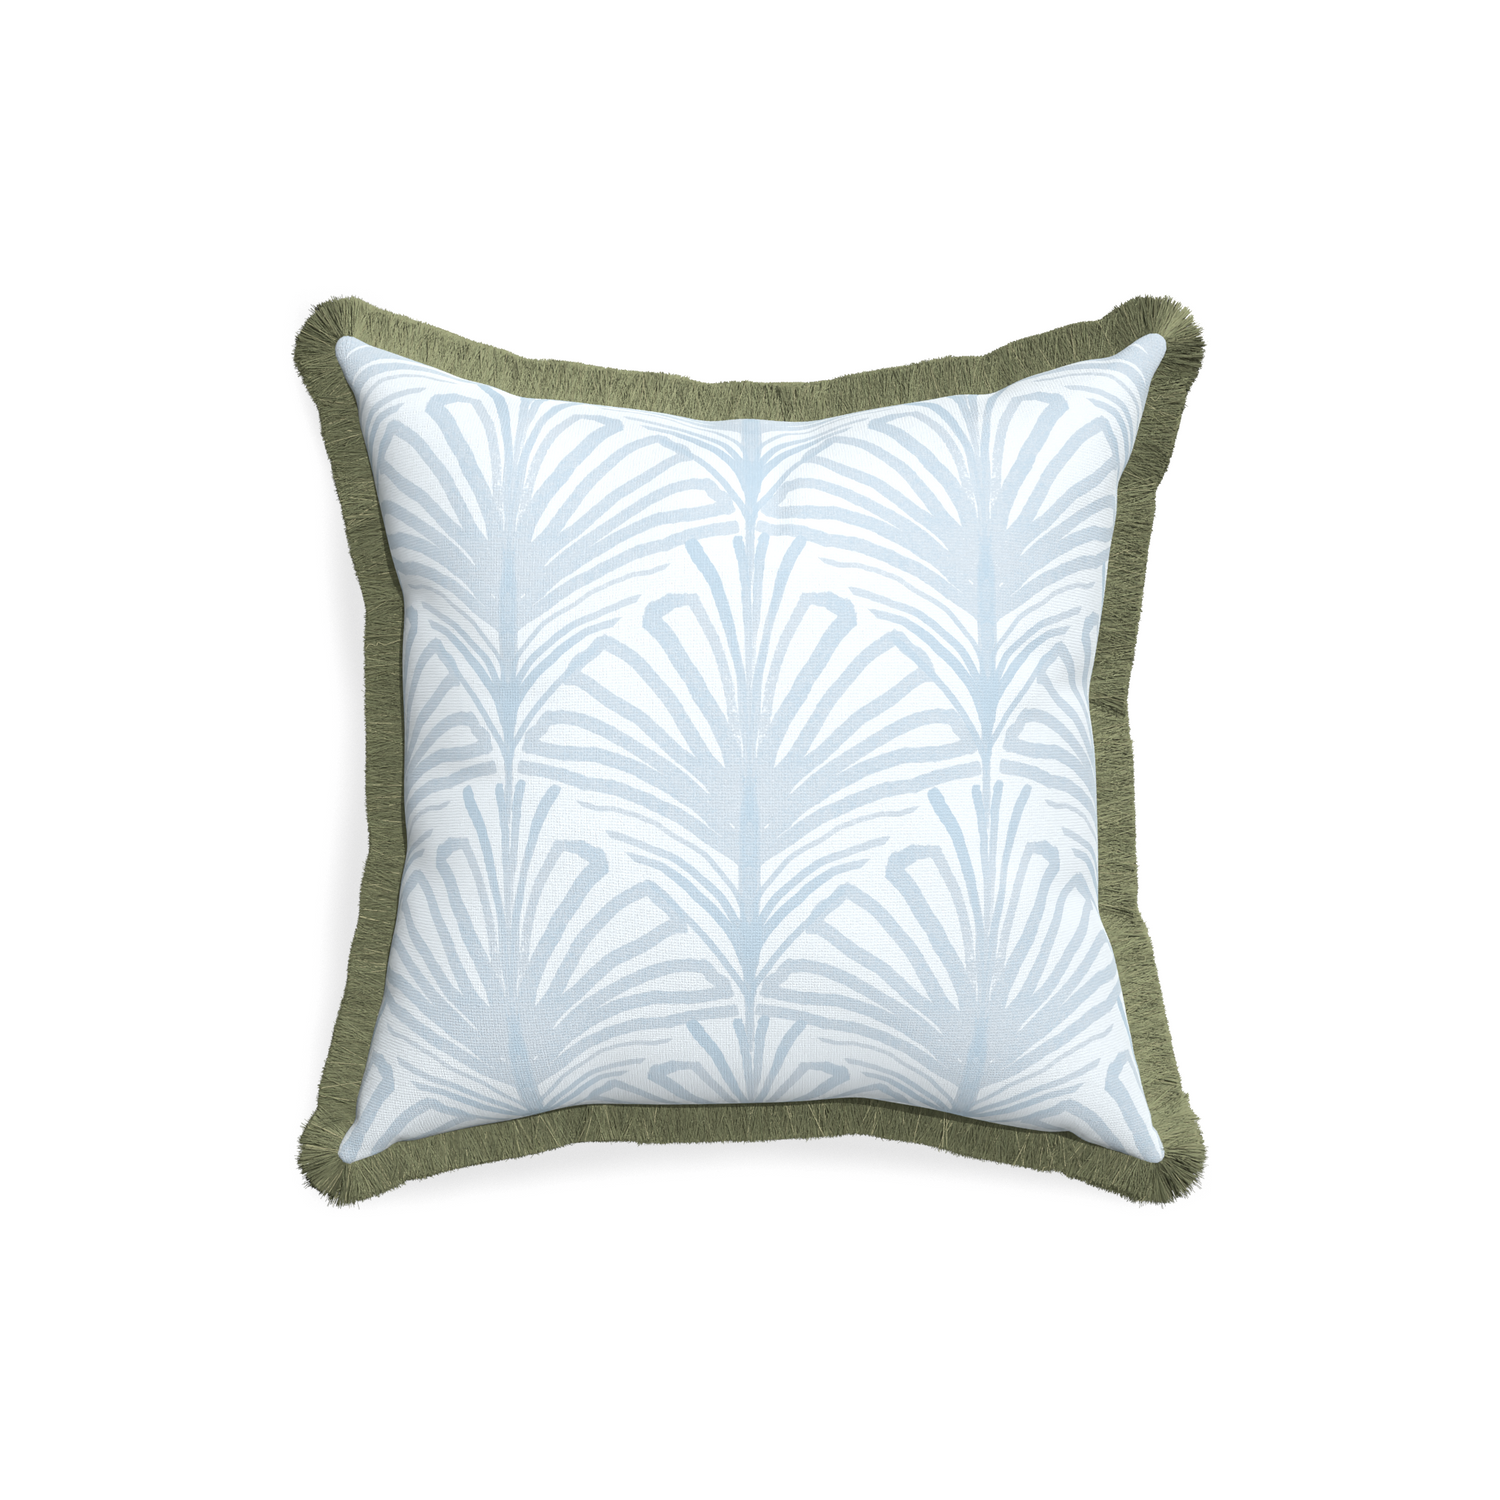 18-square suzy sky custom pillow with sage fringe on white background